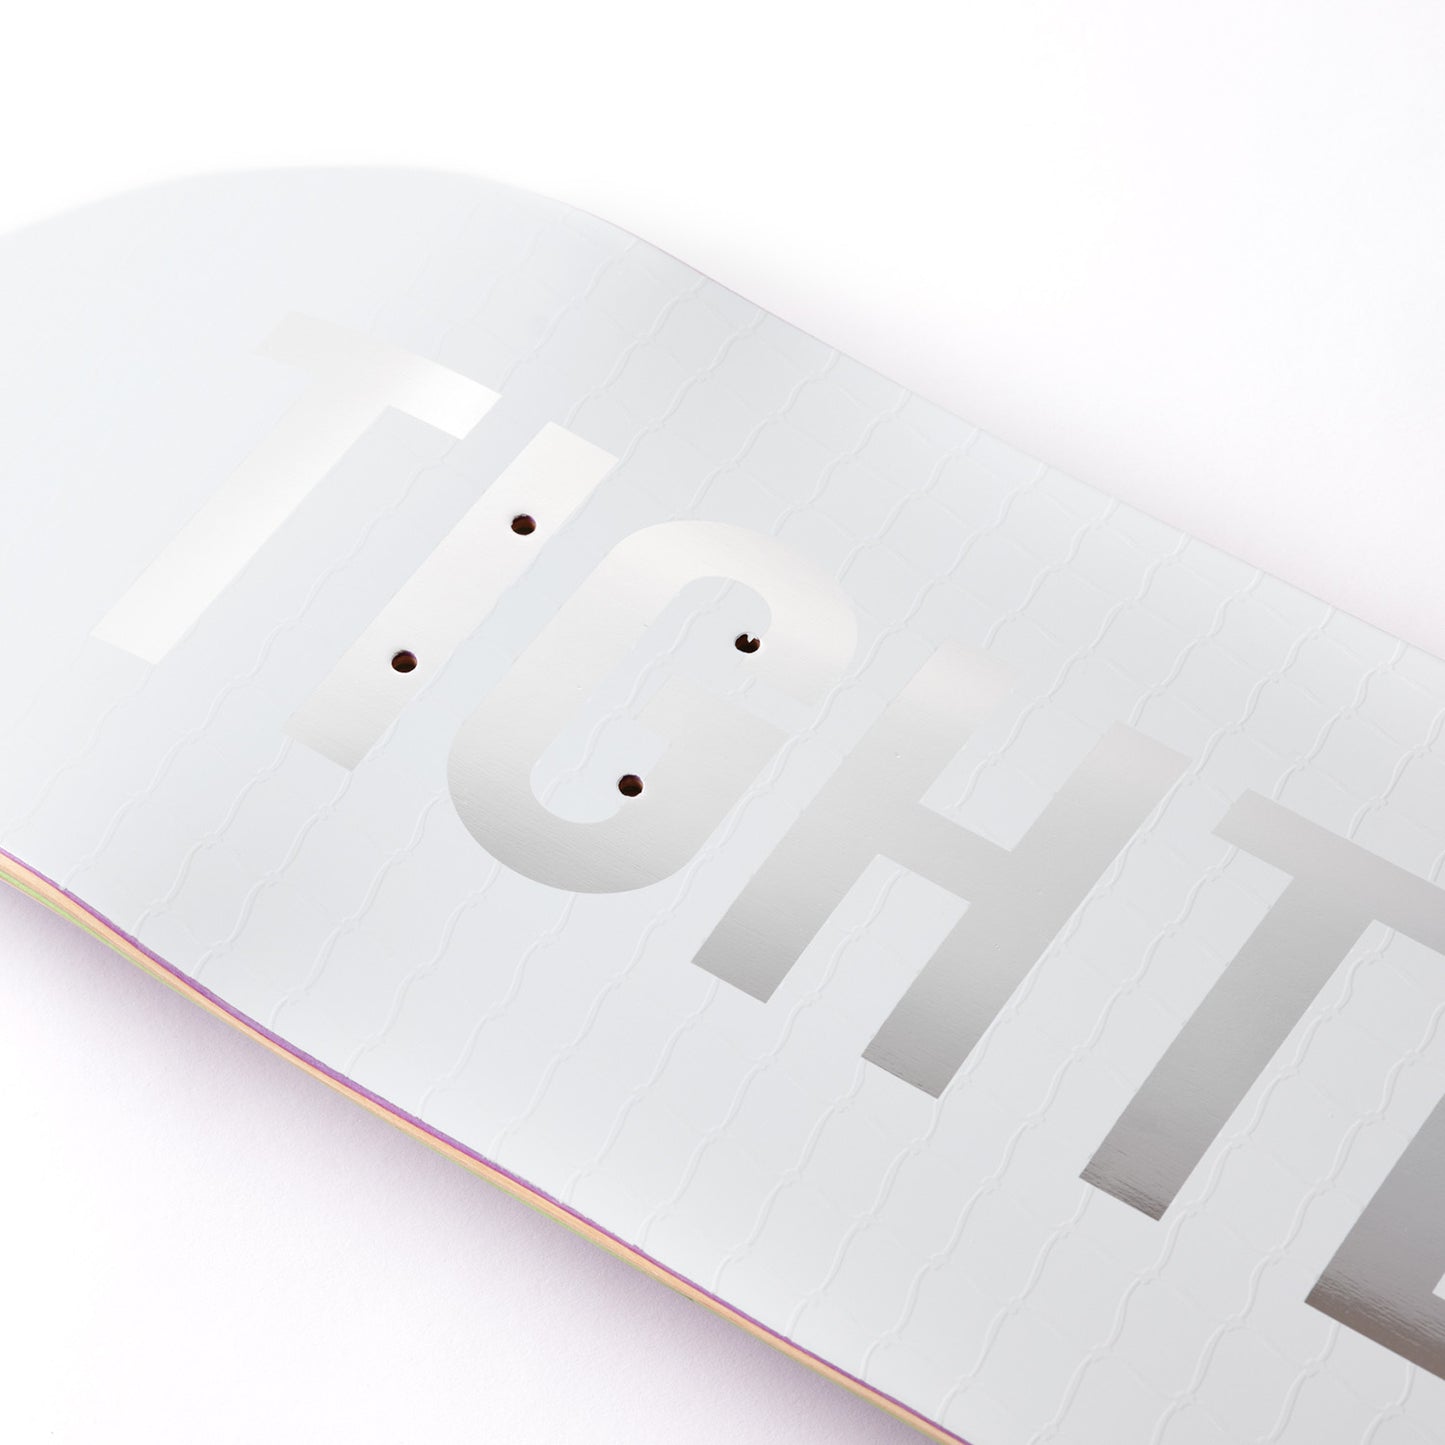 TIGHTBOOTH Logo White Deck 8.0"